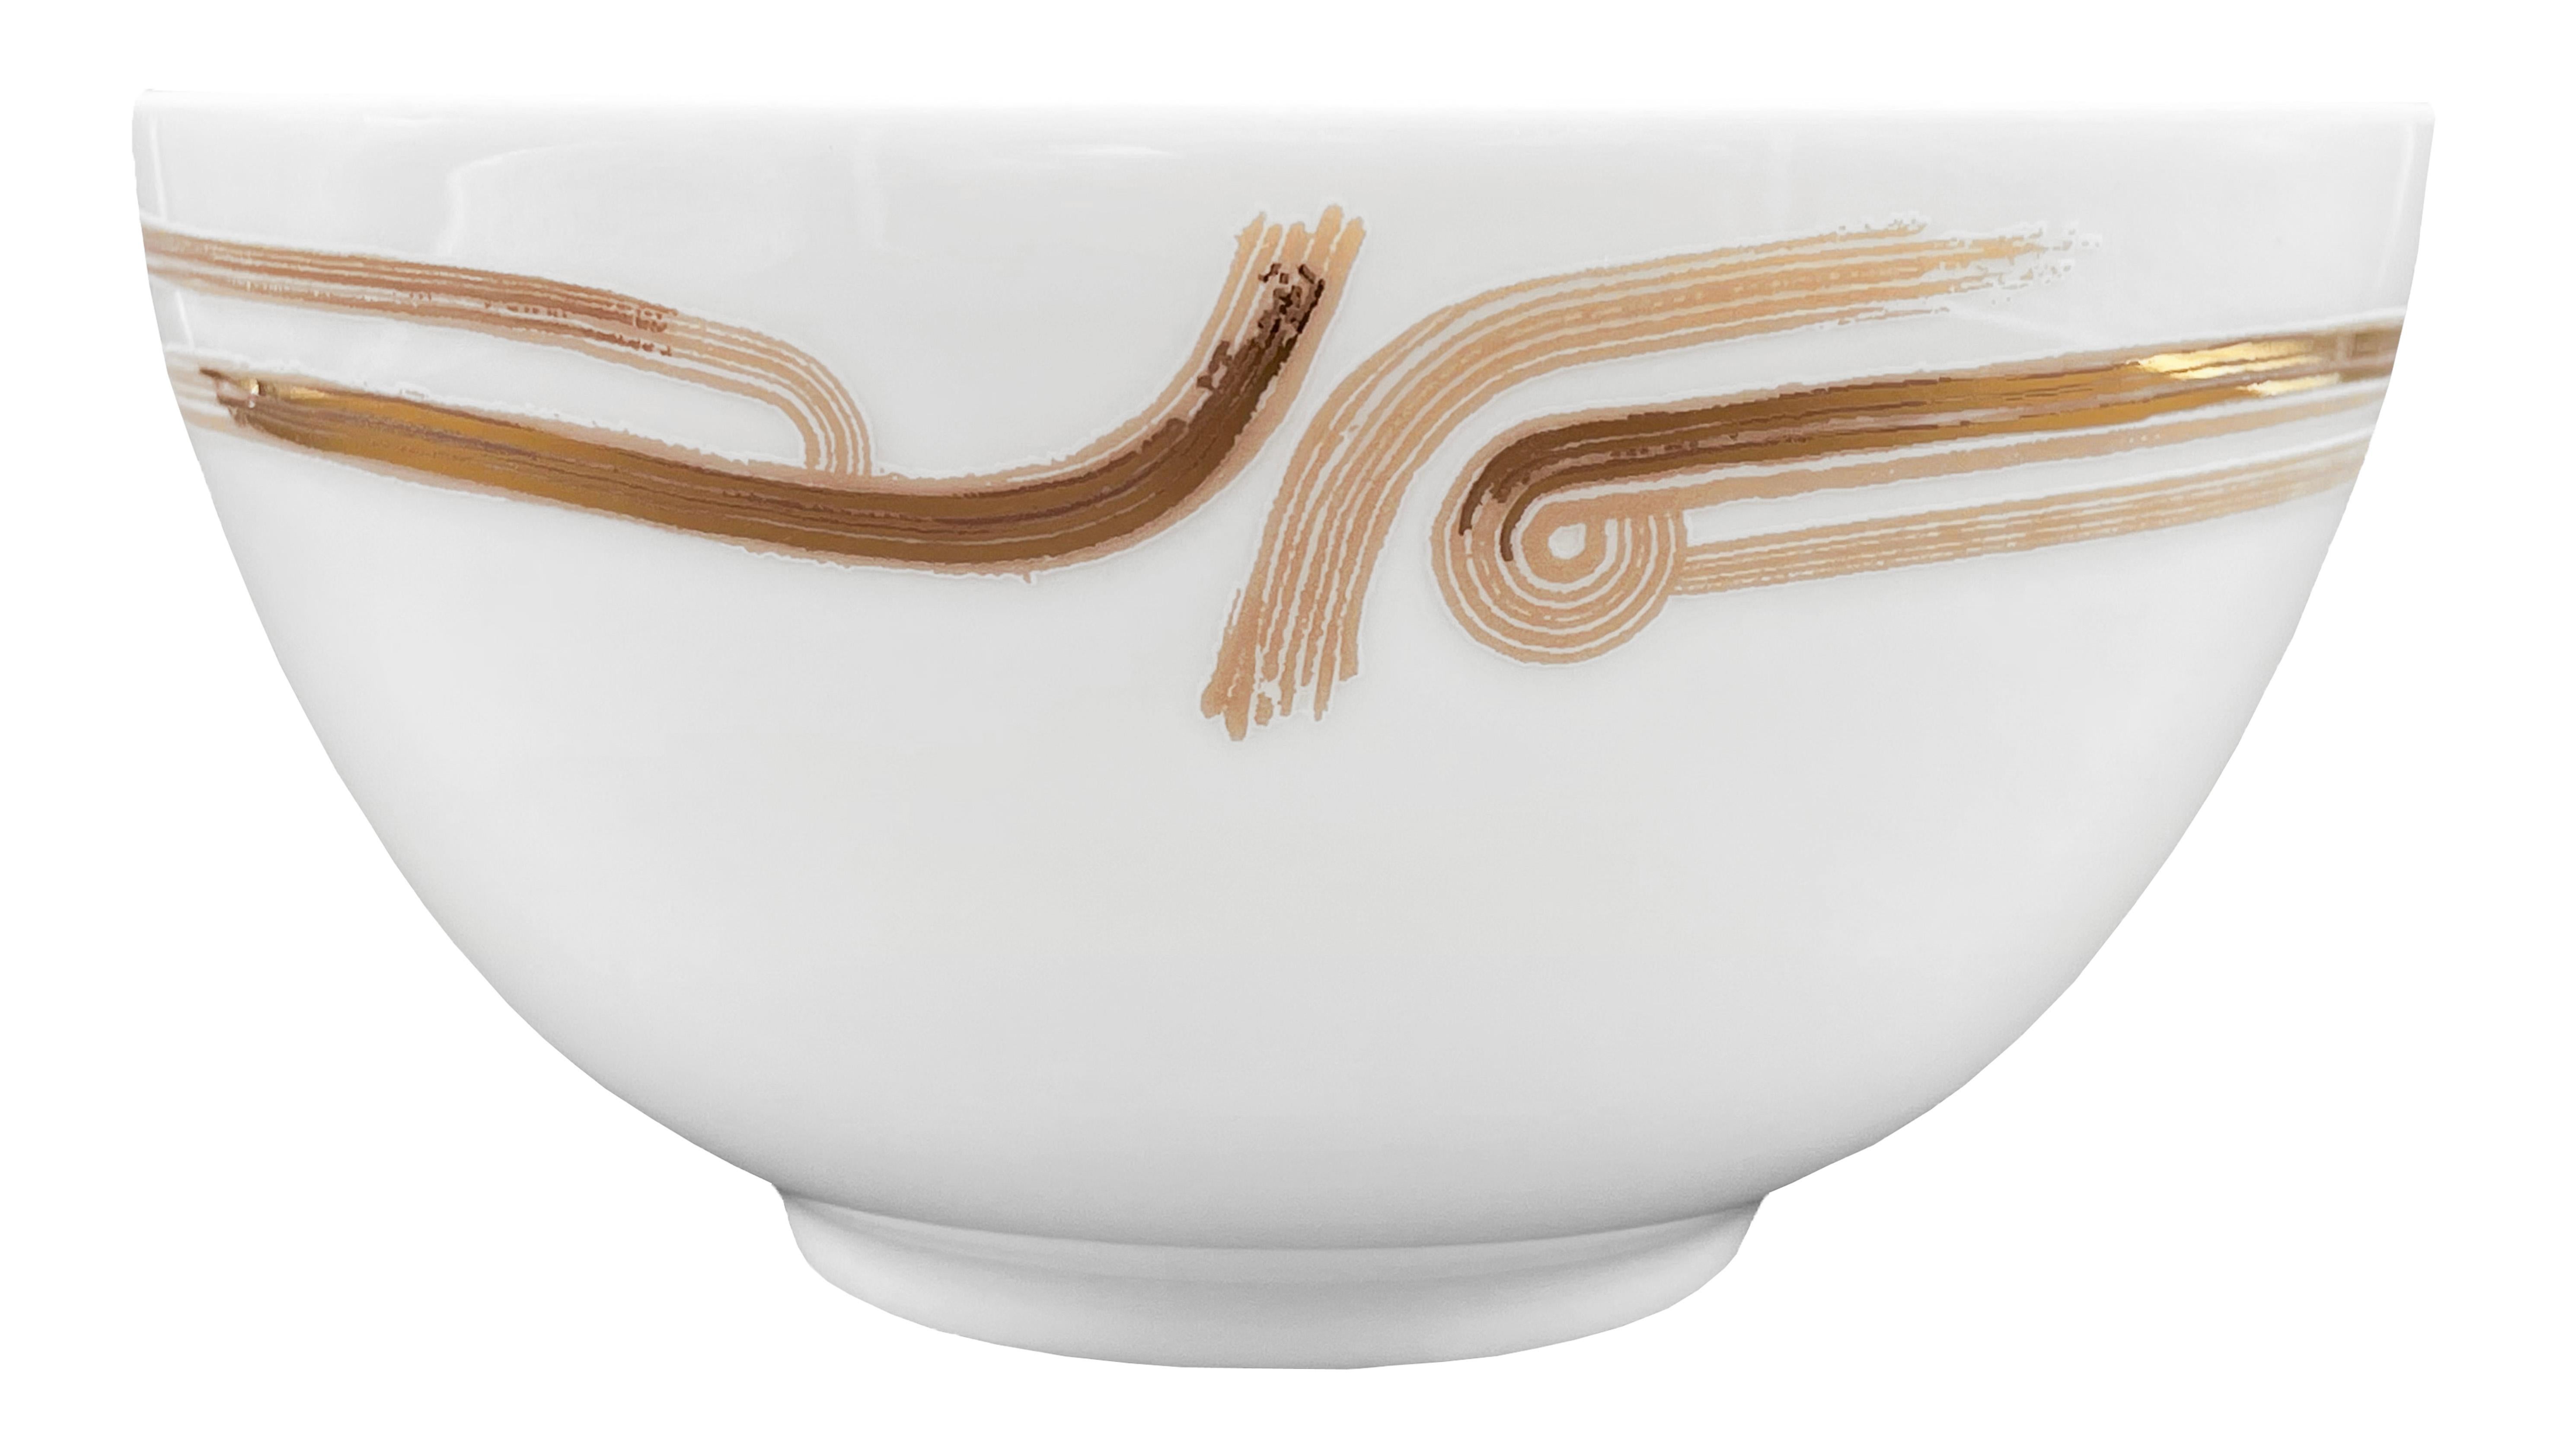 Description: Chinese soup bowl (2 pieces)
Color: Beige gold
Size: 12 Ø x 6 H cm
Material: Porcelain and gold
Collection: Art Déco Garden

Larger quantities available upon request, with 8 weeks production time.